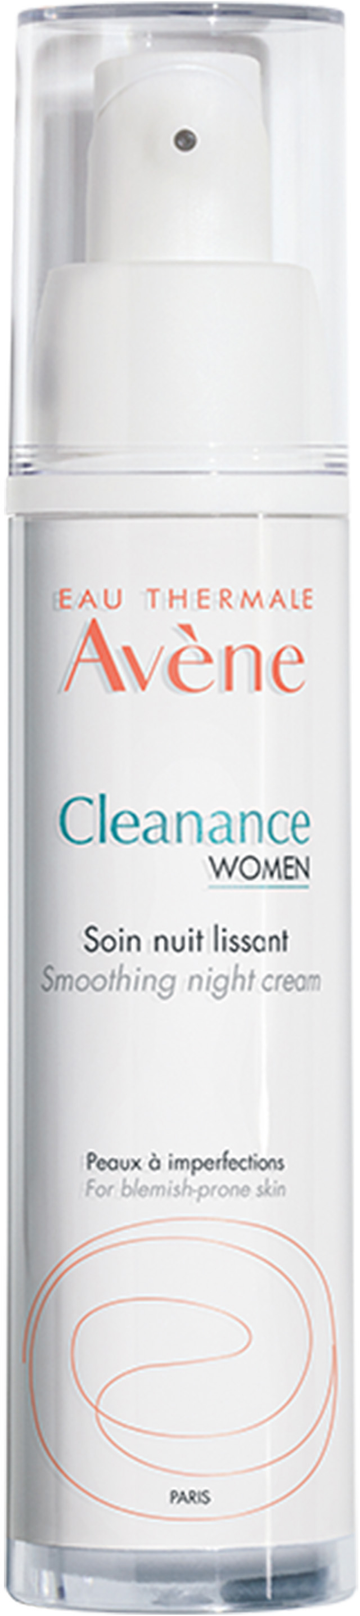 Avène Cleanance Women Smoothing night cream